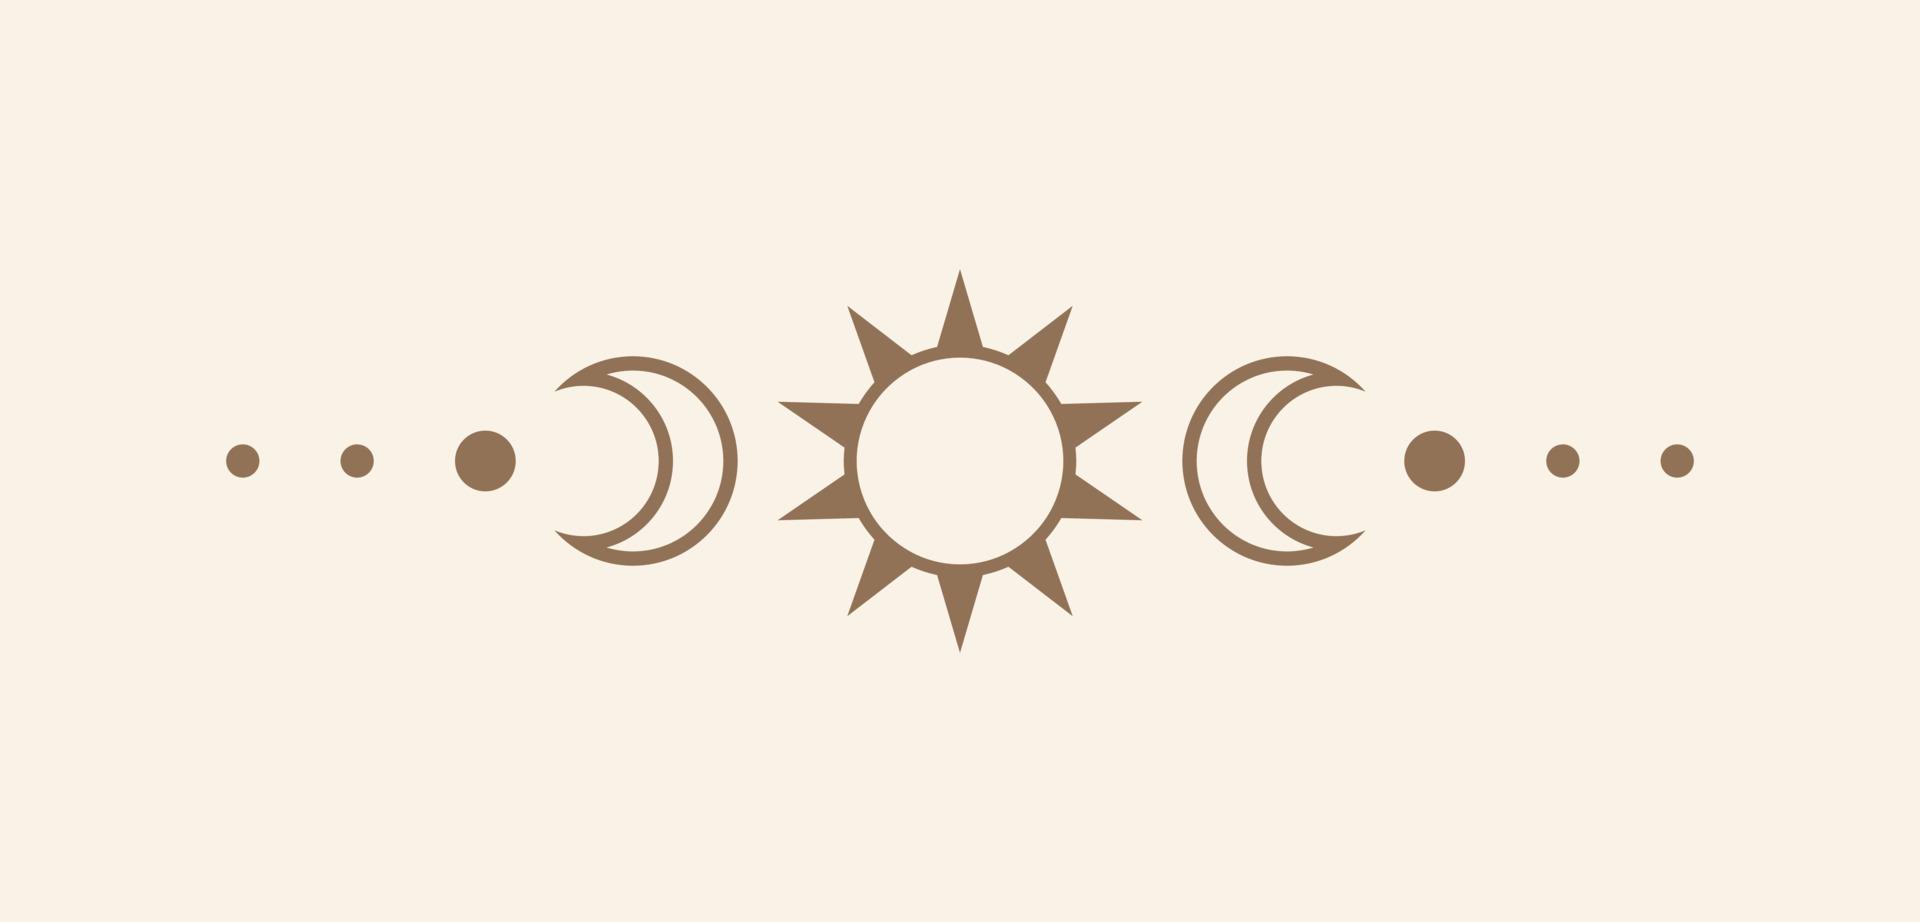 celestial texto divisor con sol, estrellas, Luna etapas, medias lunas florido boho místico separador decorativo elemento vector